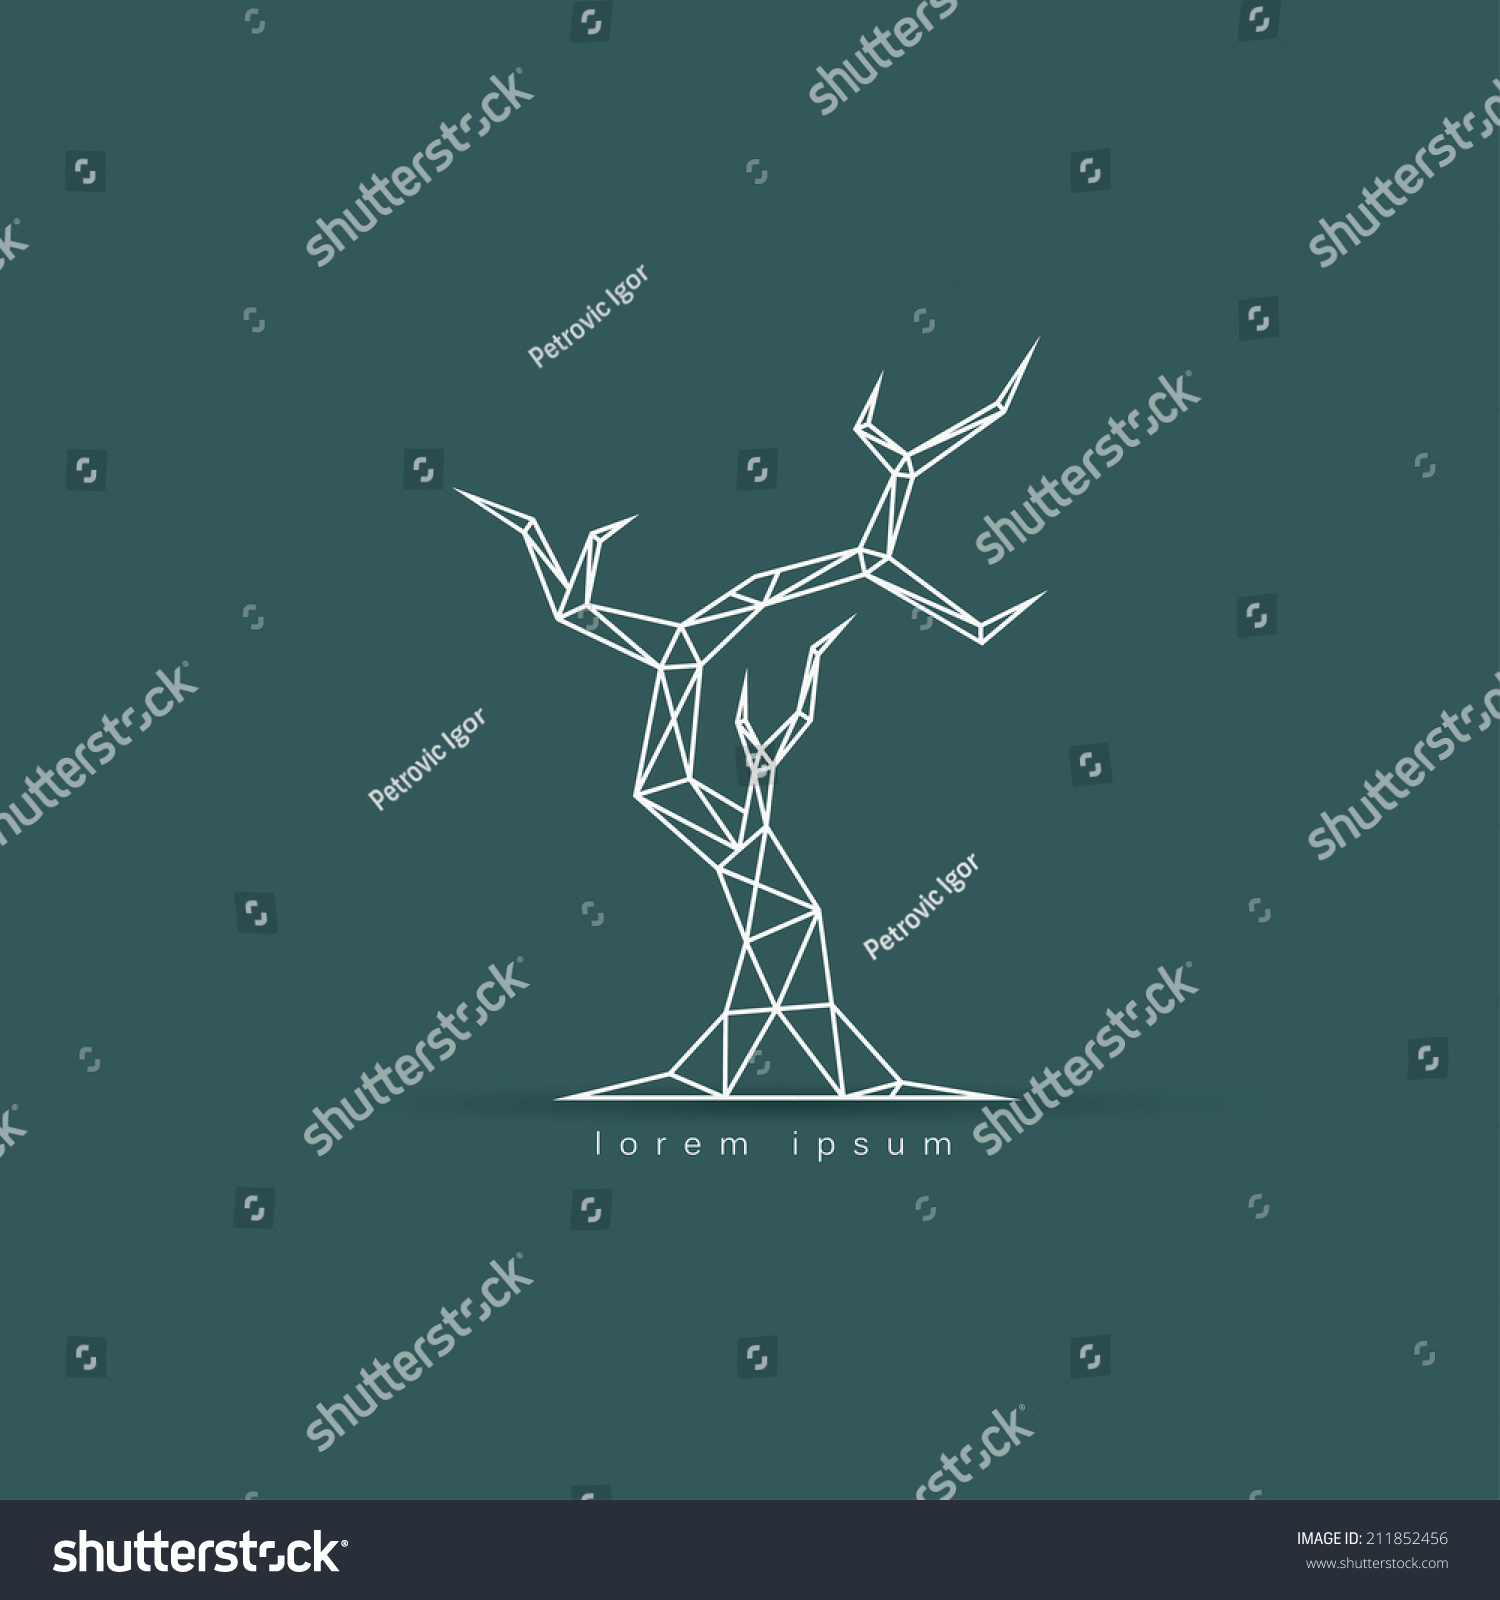 Geometric Tree - Vector Illustration - 211852456 : Shutterstock